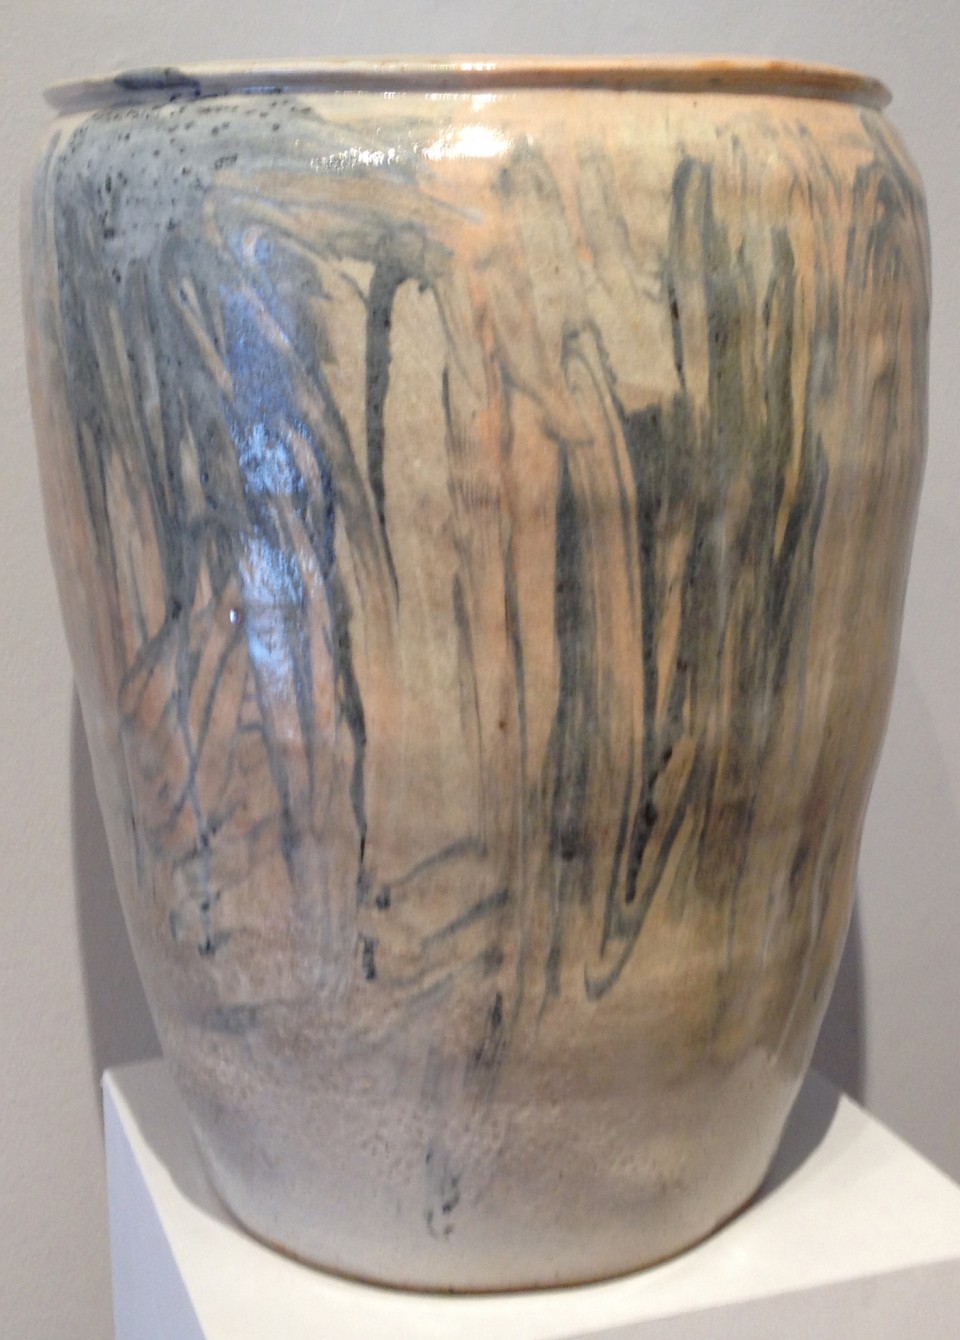 In-Chin Lee, Large Multi-Glaze Vessel, porcelain, 17 x 13 x 13